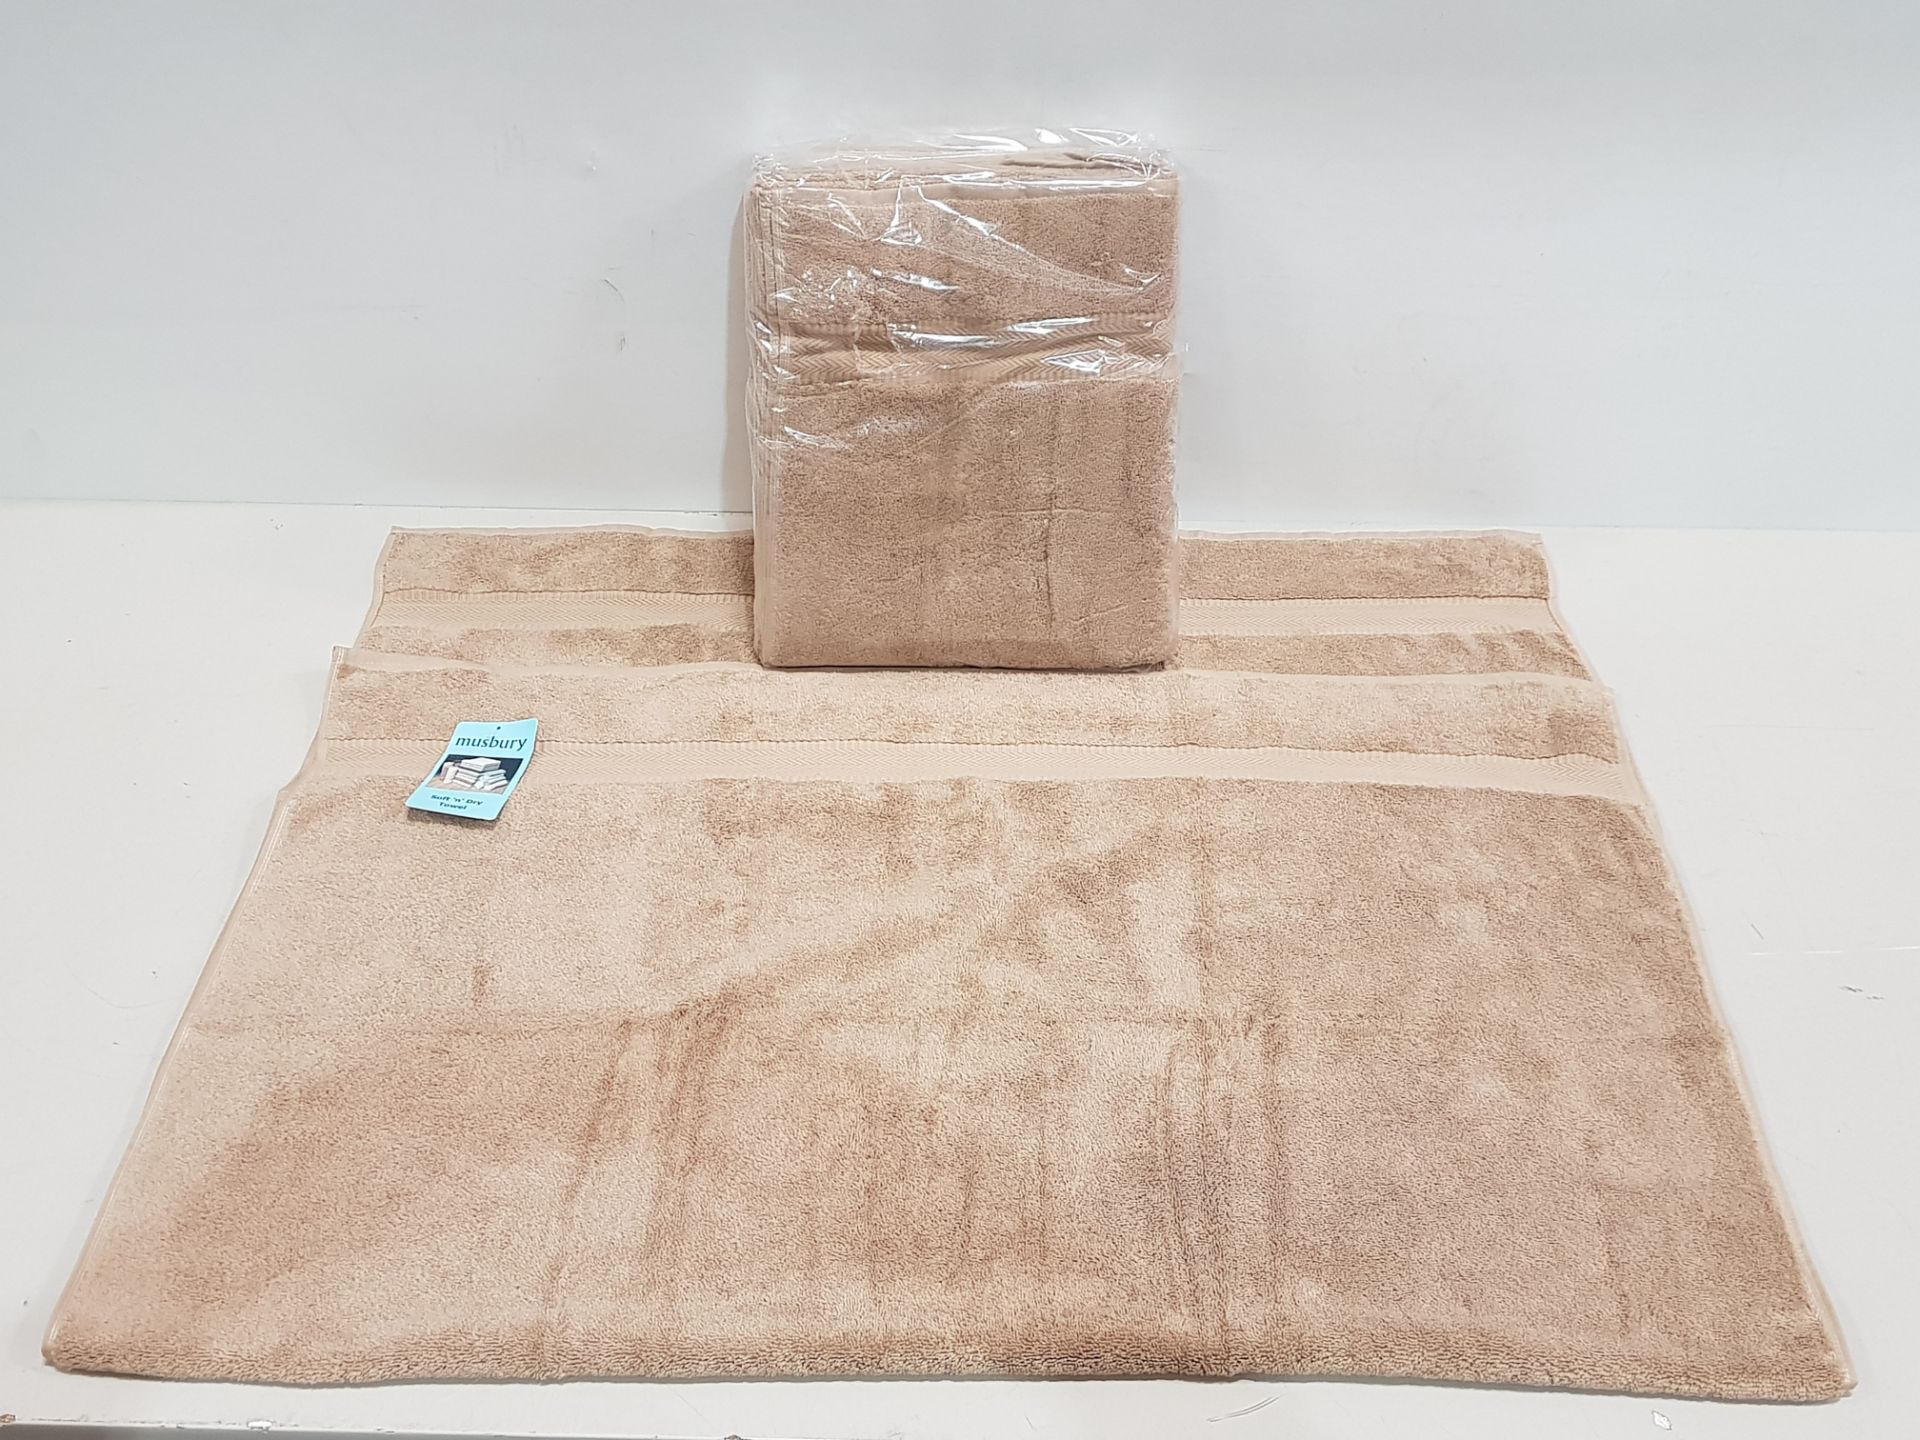 20 X BRAND NEW MUSBURY SOFT 'N' DRY BATH TOWELS IN MOCHA COLOUR (SIZE : 100 X 150 CM ) - IN 1 BOX